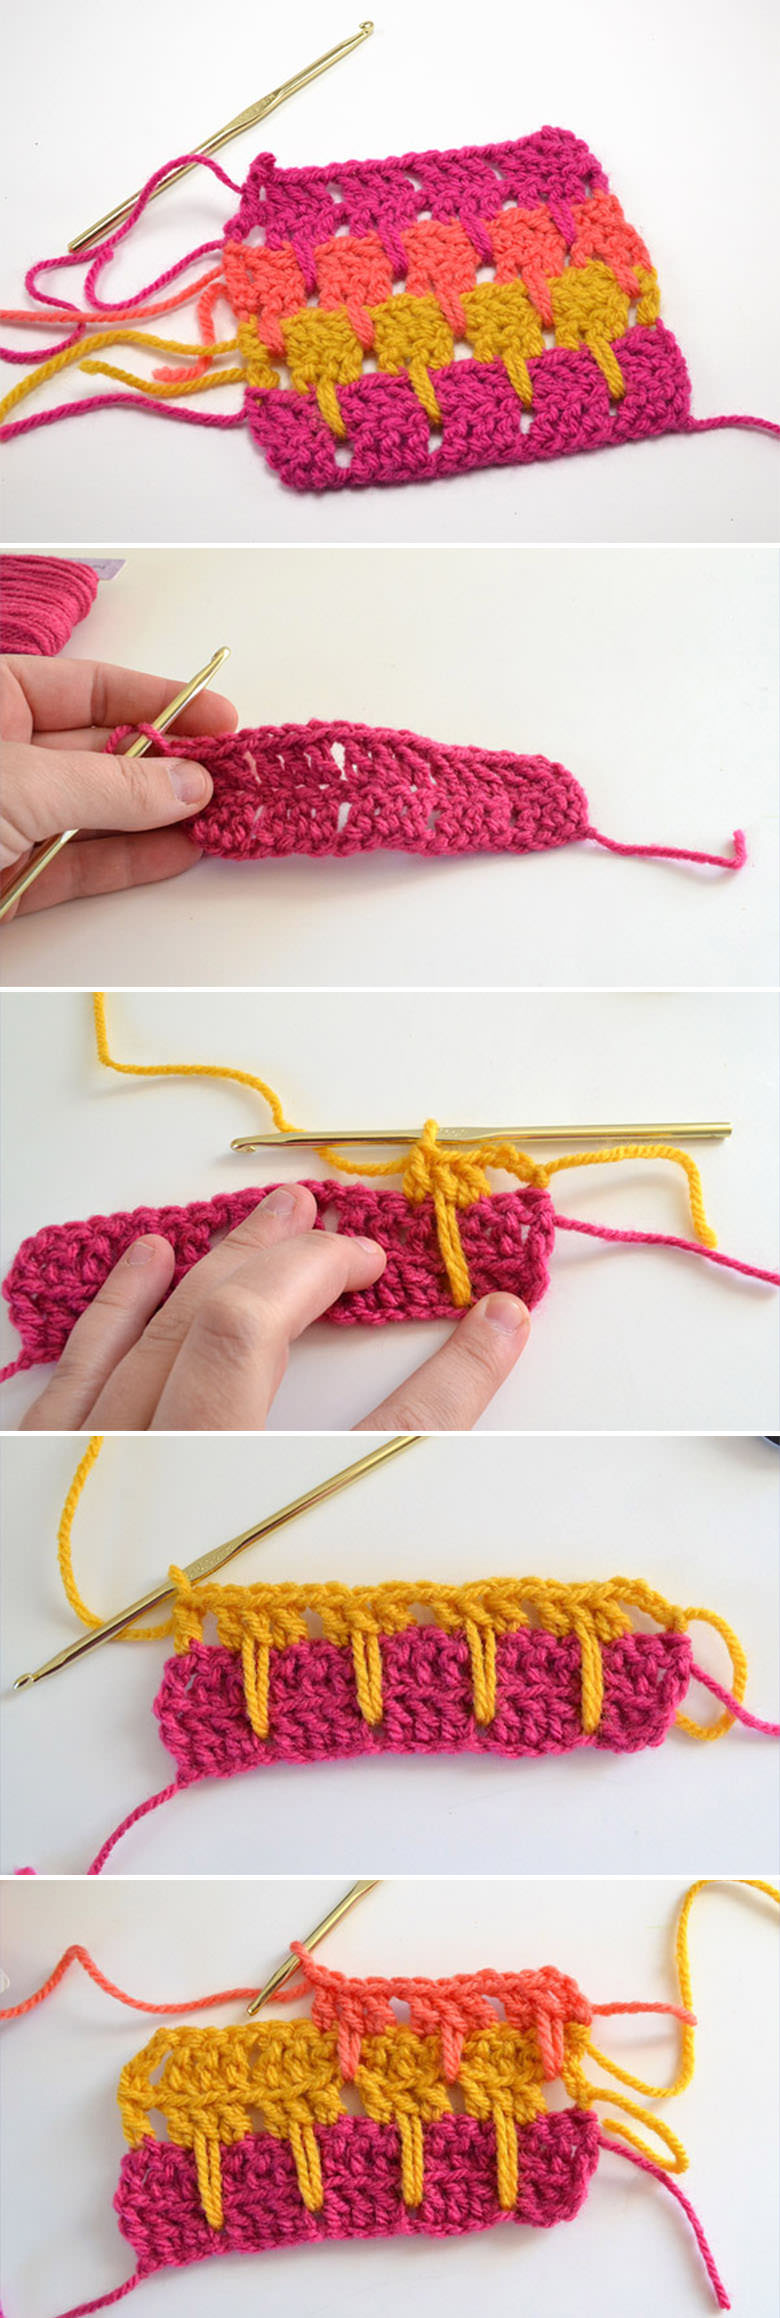 Larks Foot Stitch Crochet Pattern Tutorial